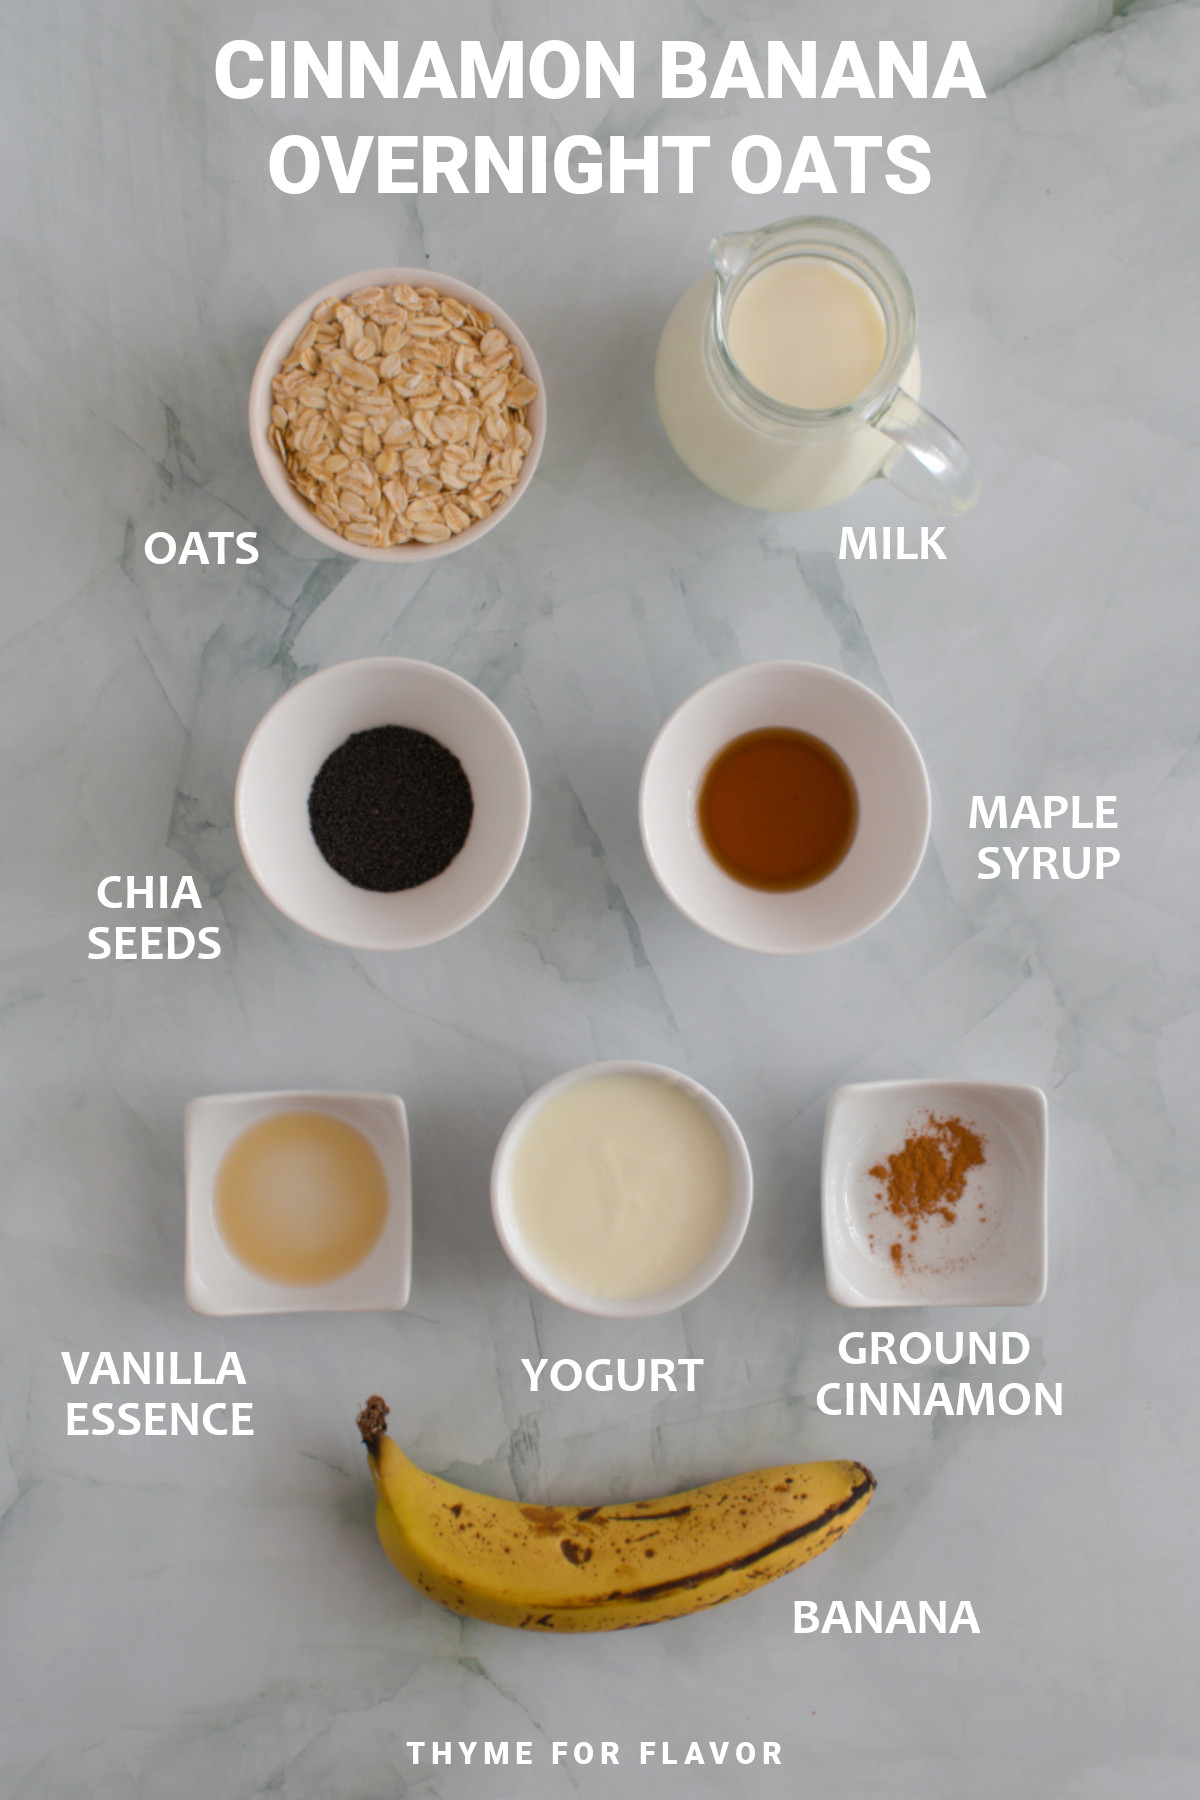 Ingredients for cinnamon banana overnight oats.